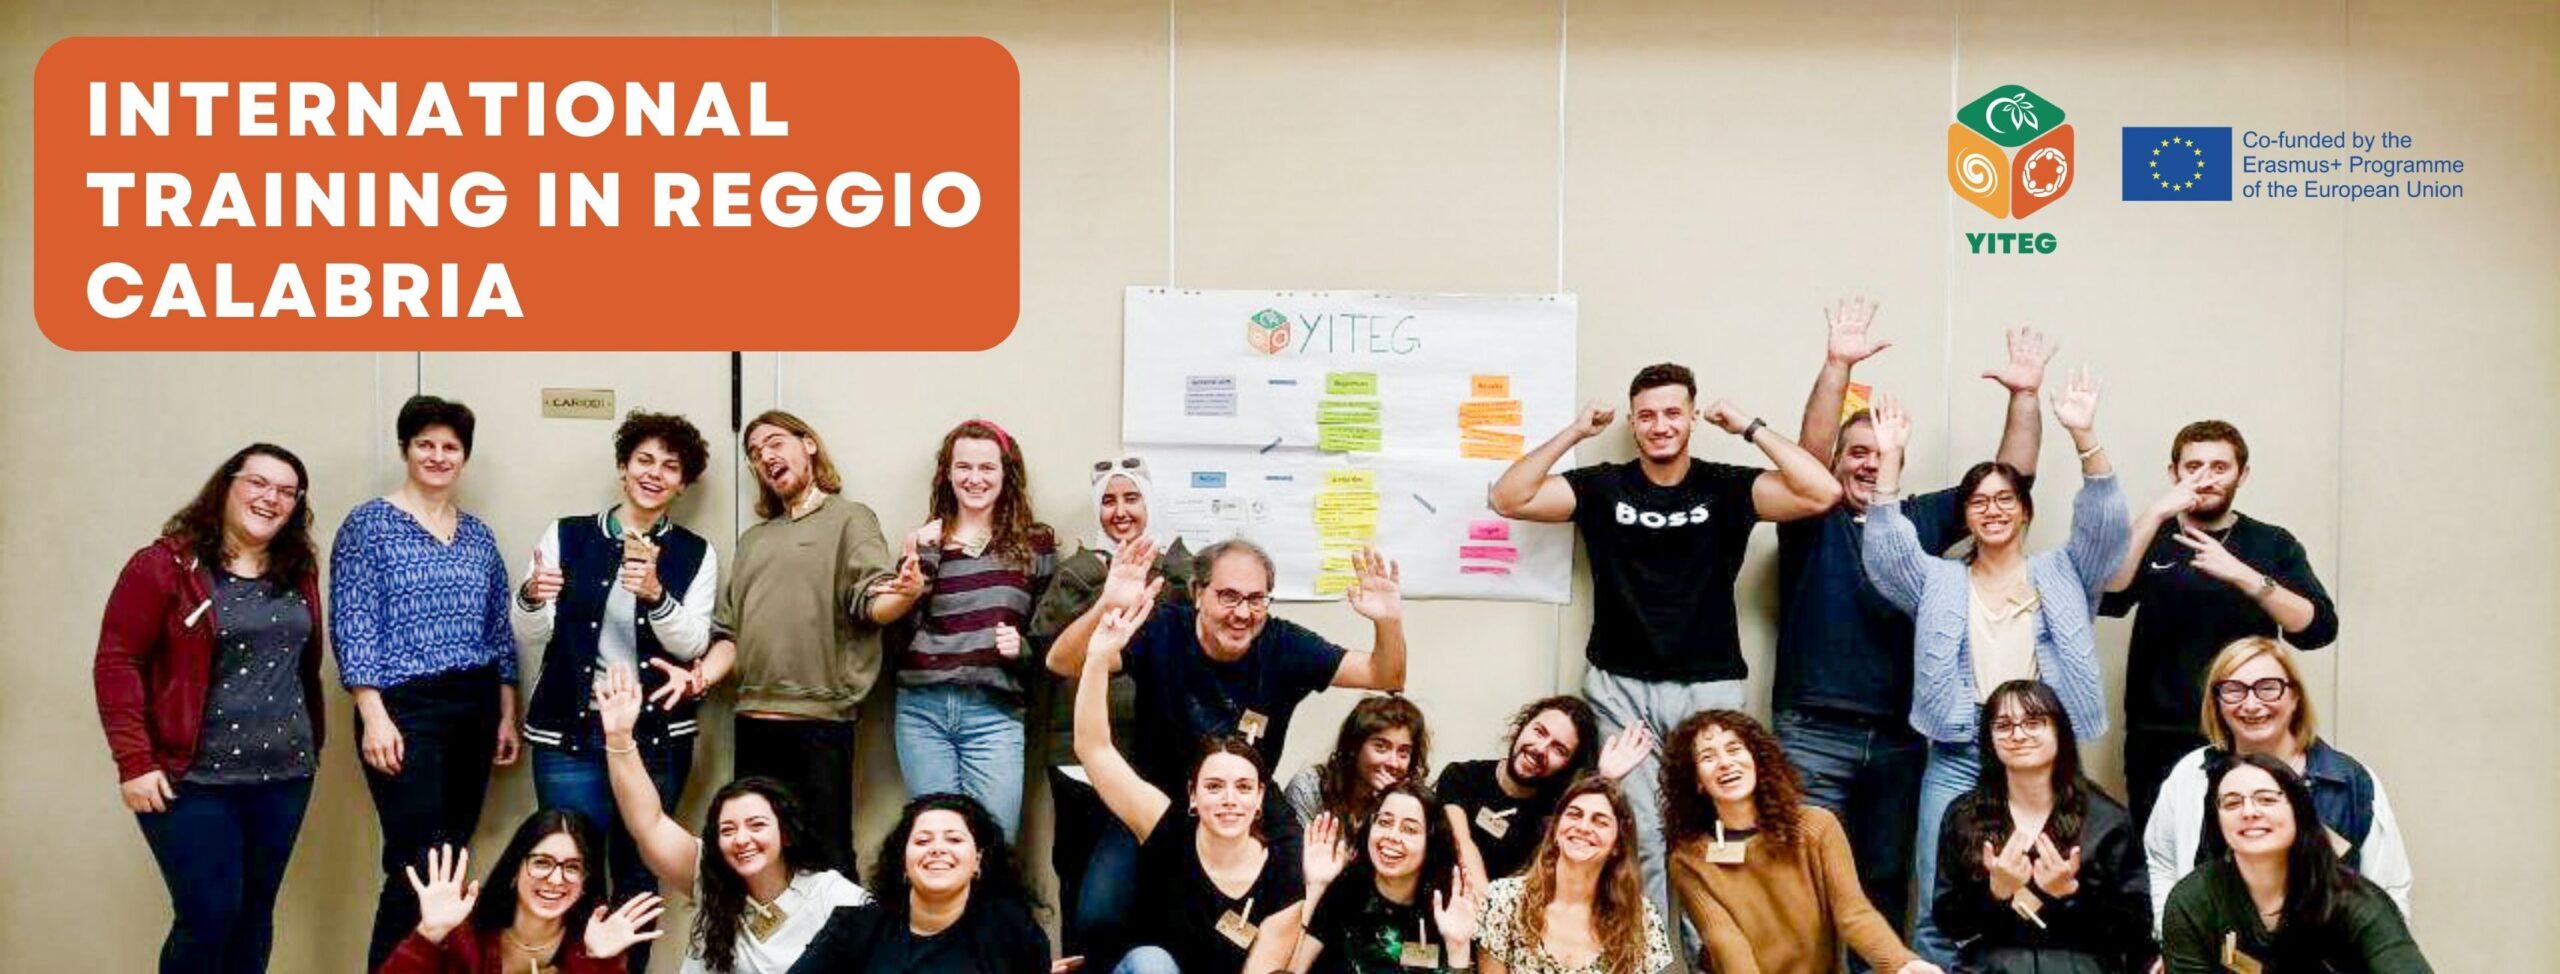 Game Design as an educational tool – international training in Reggio Calabria